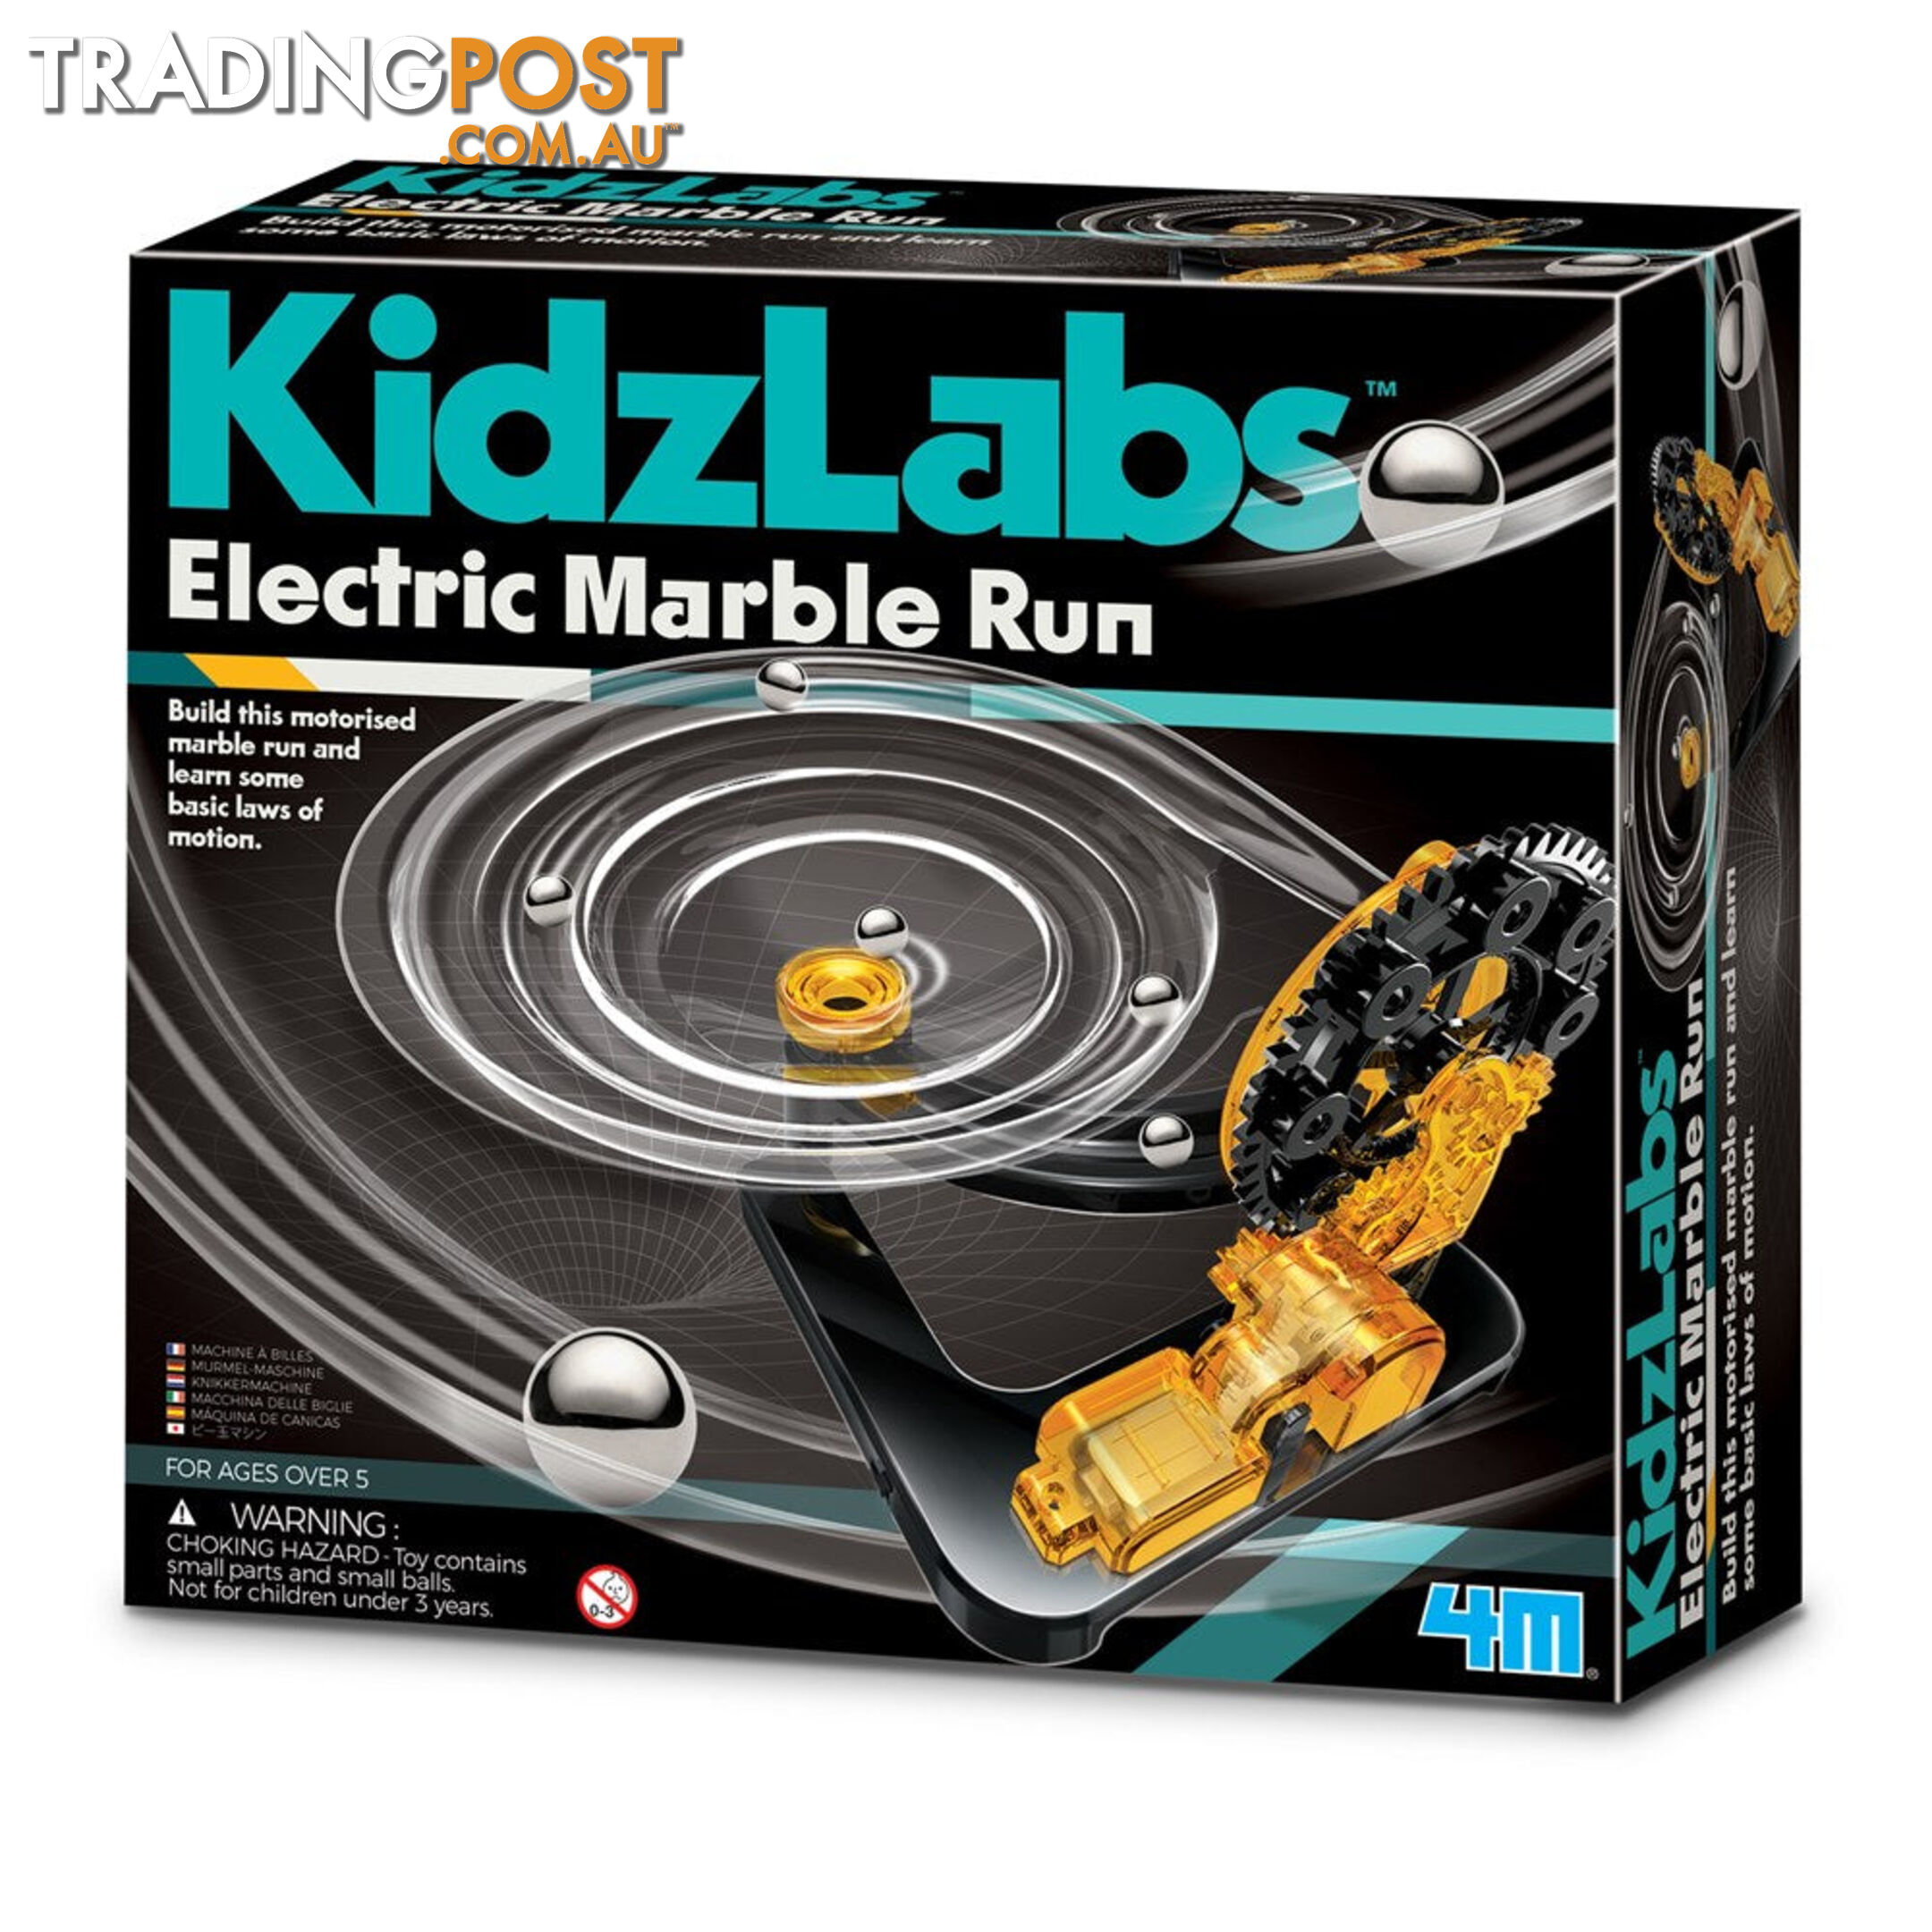 4m - Kidzlabs - Electric Marble Run Jpfsg3456 - 4893156034564